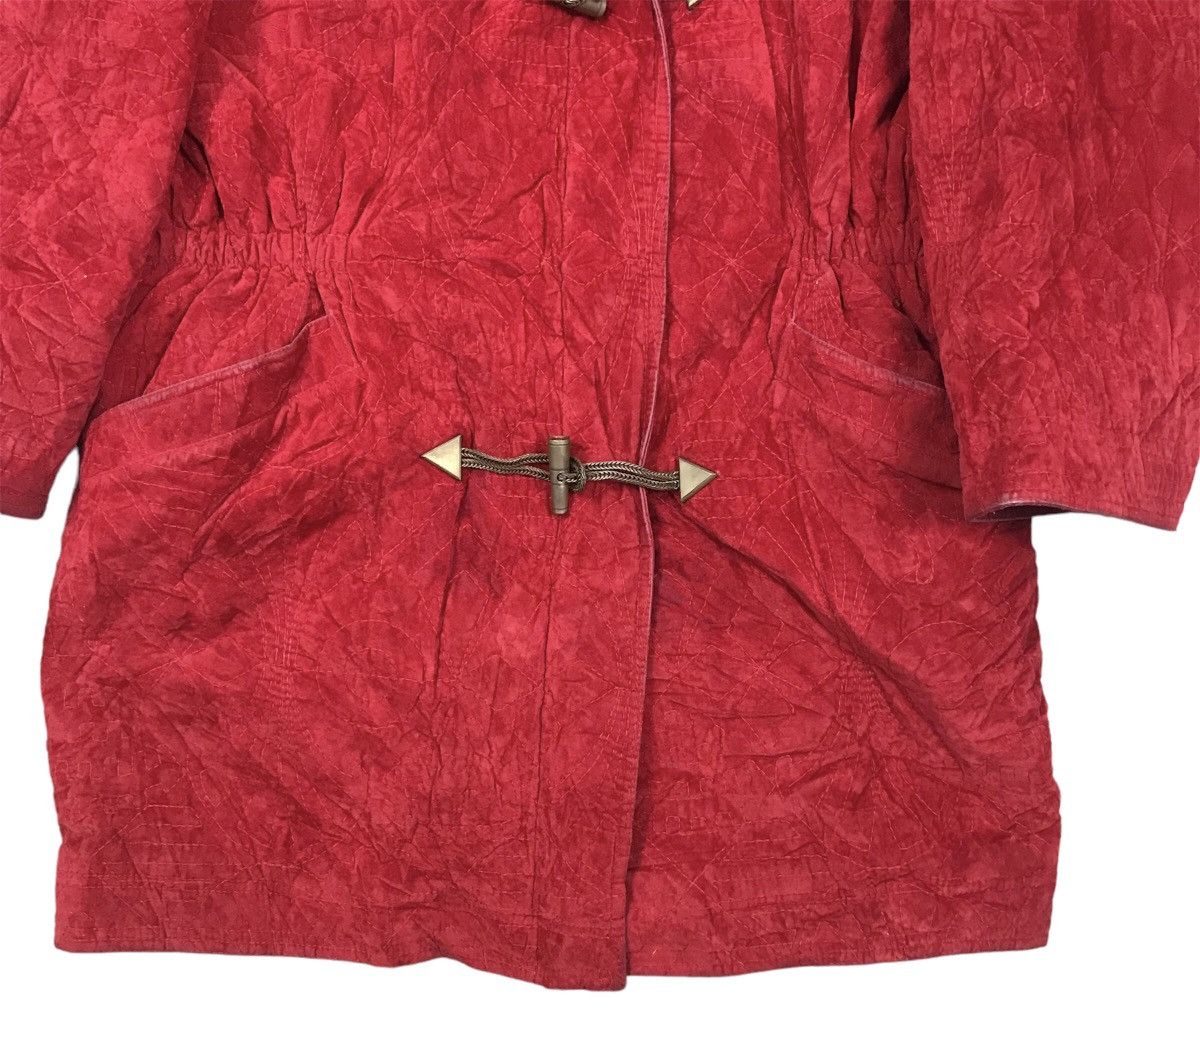 Versace Vintage Gianni Versace Quilted Suede Duffle Coat Jacket Size US M / EU 48-50 / 2 - 5 Thumbnail